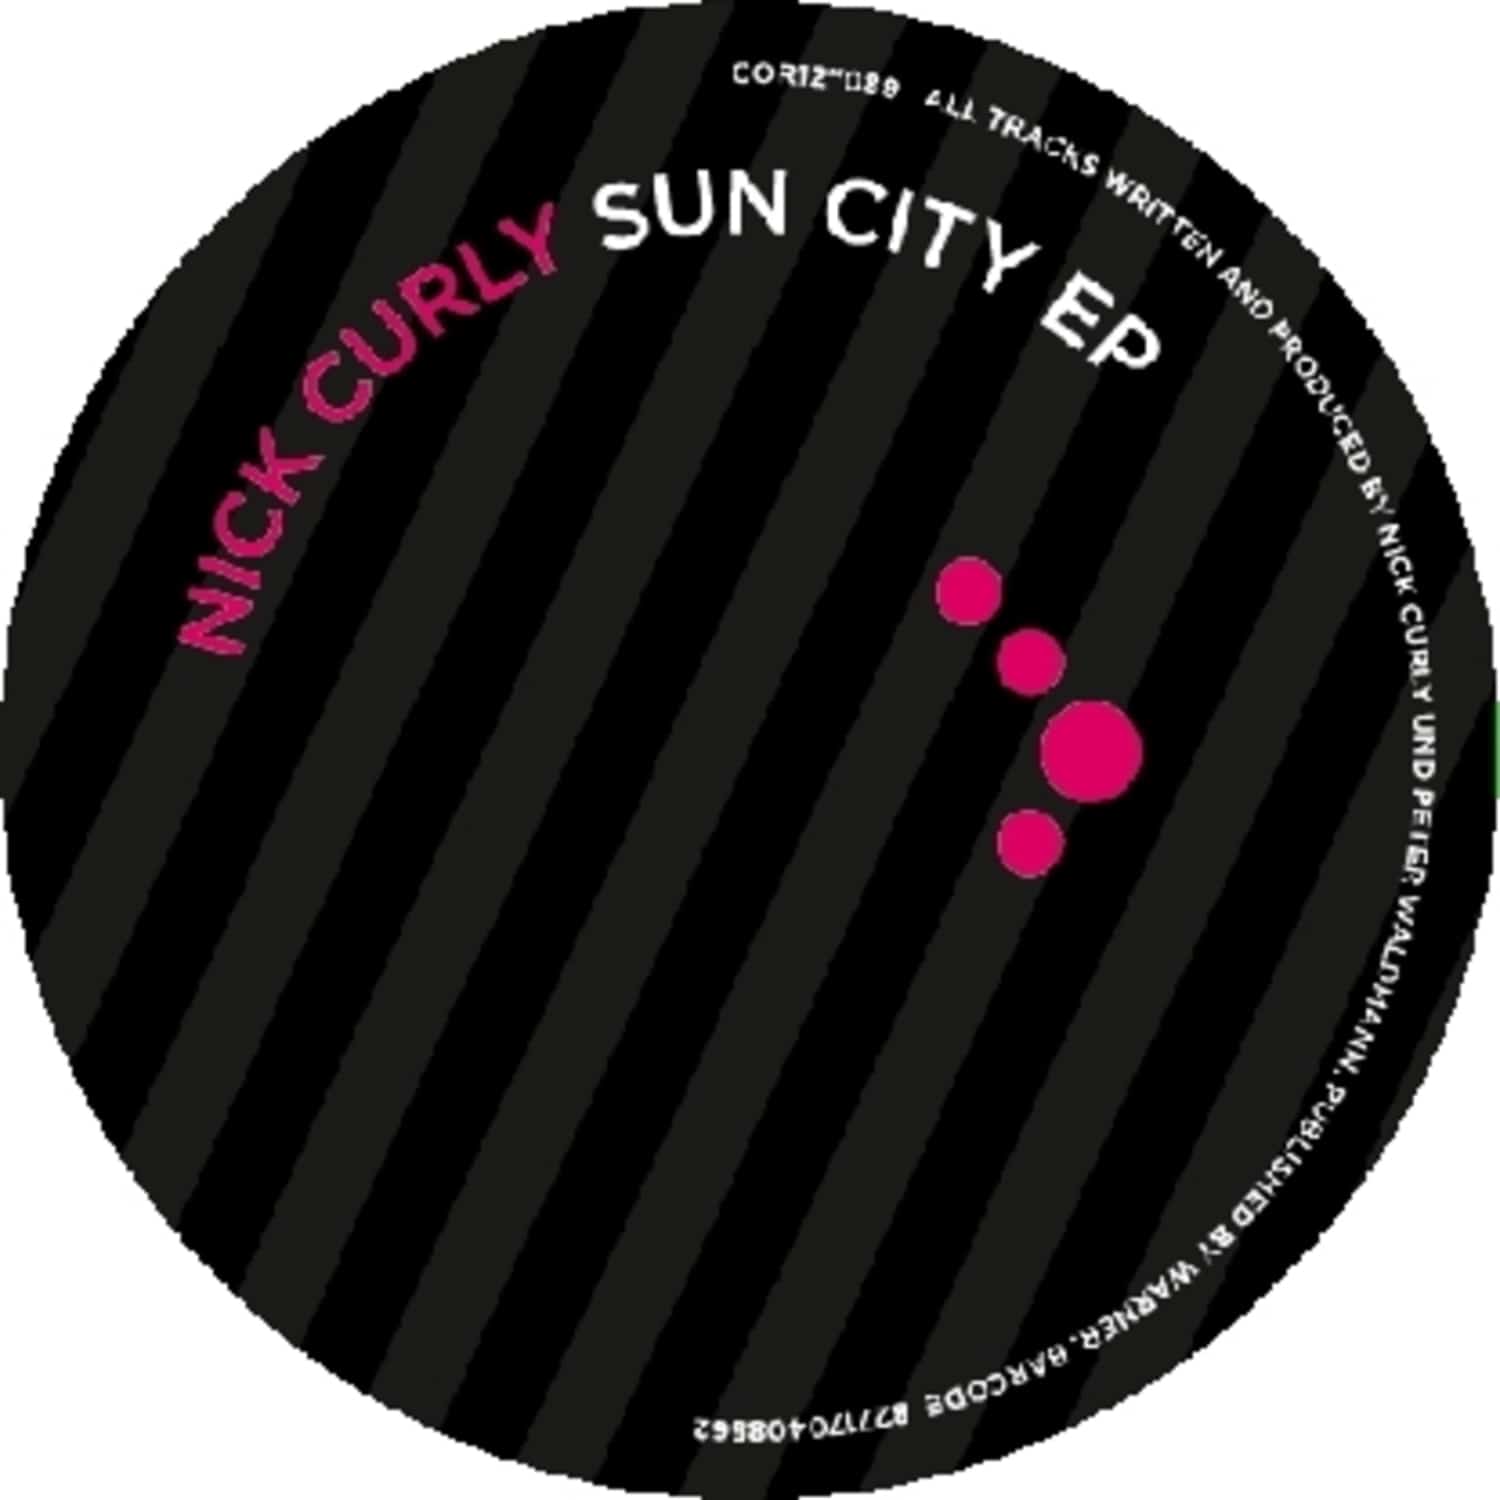 Nick Curly - SUN CITY